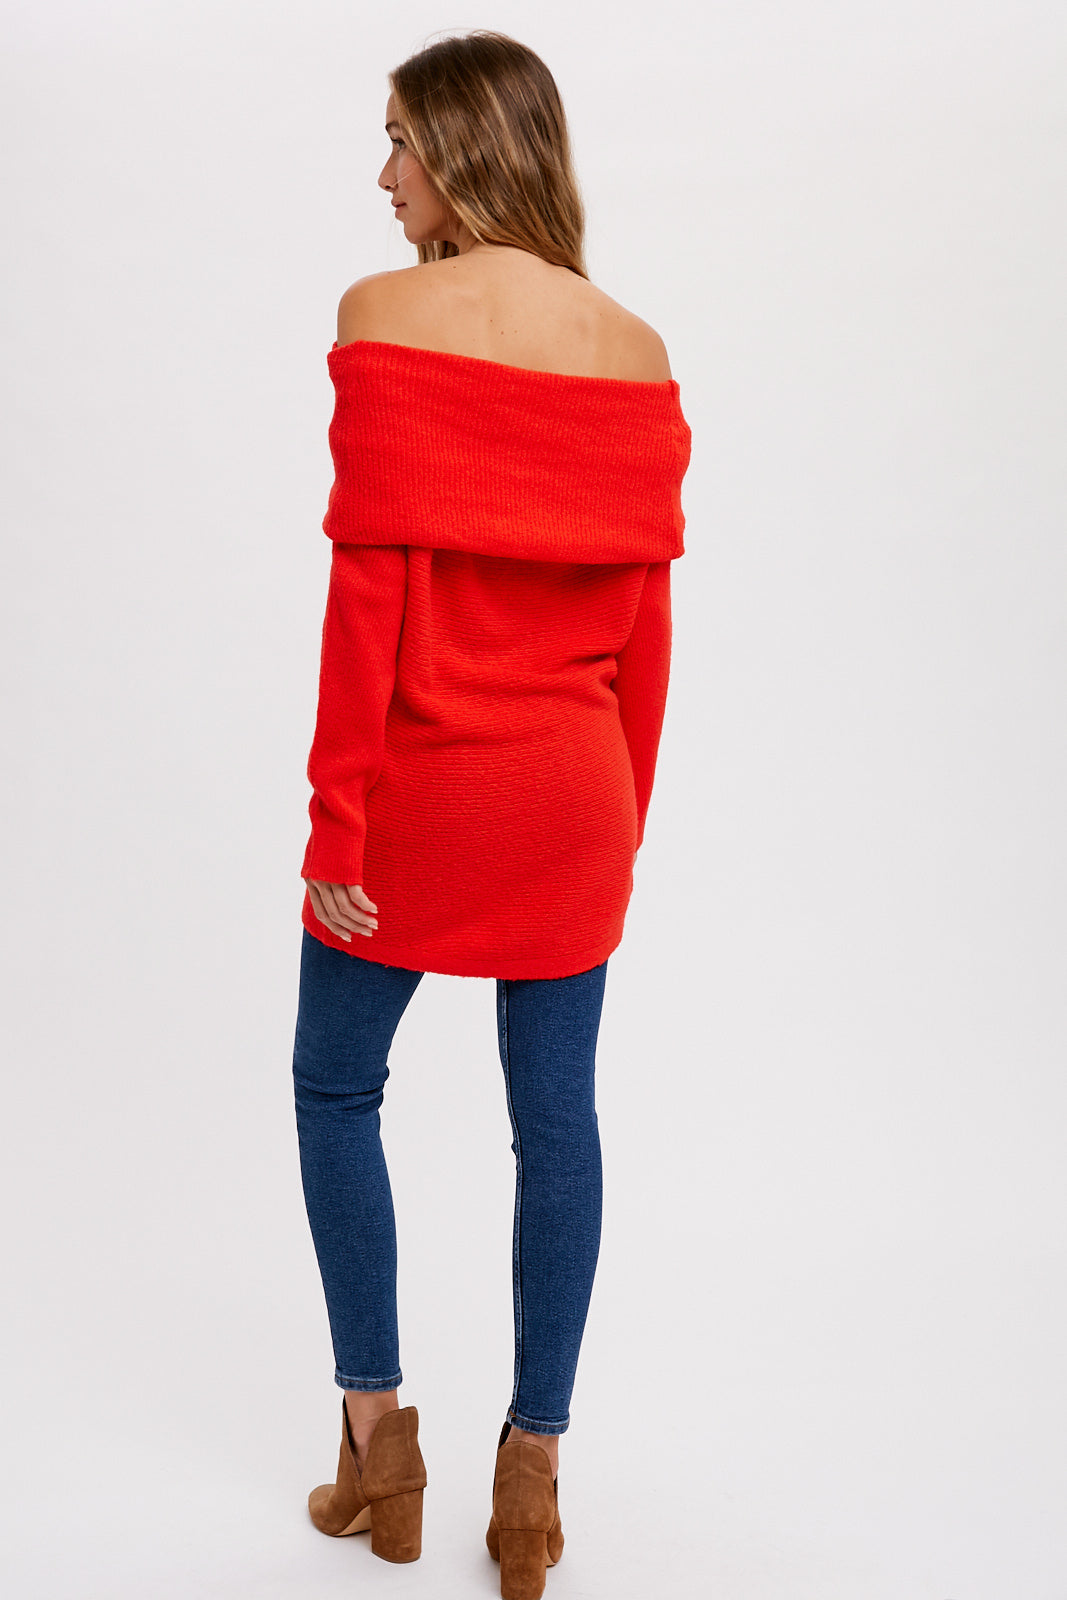 Red Dolman Sweater